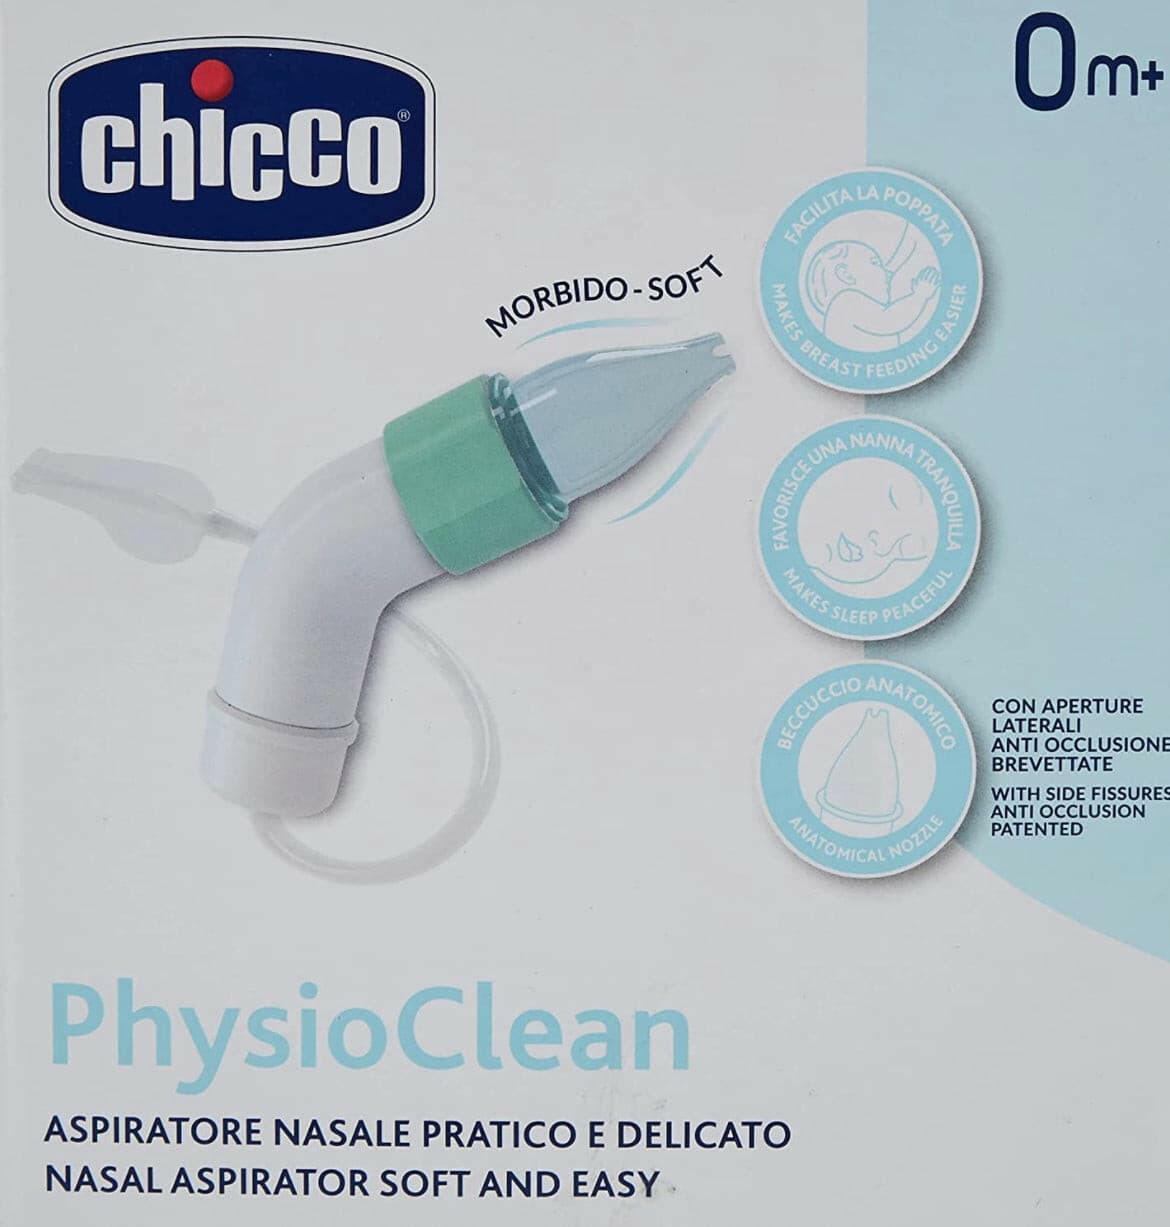 Chicco Physio Clean Nasal Aspirator.